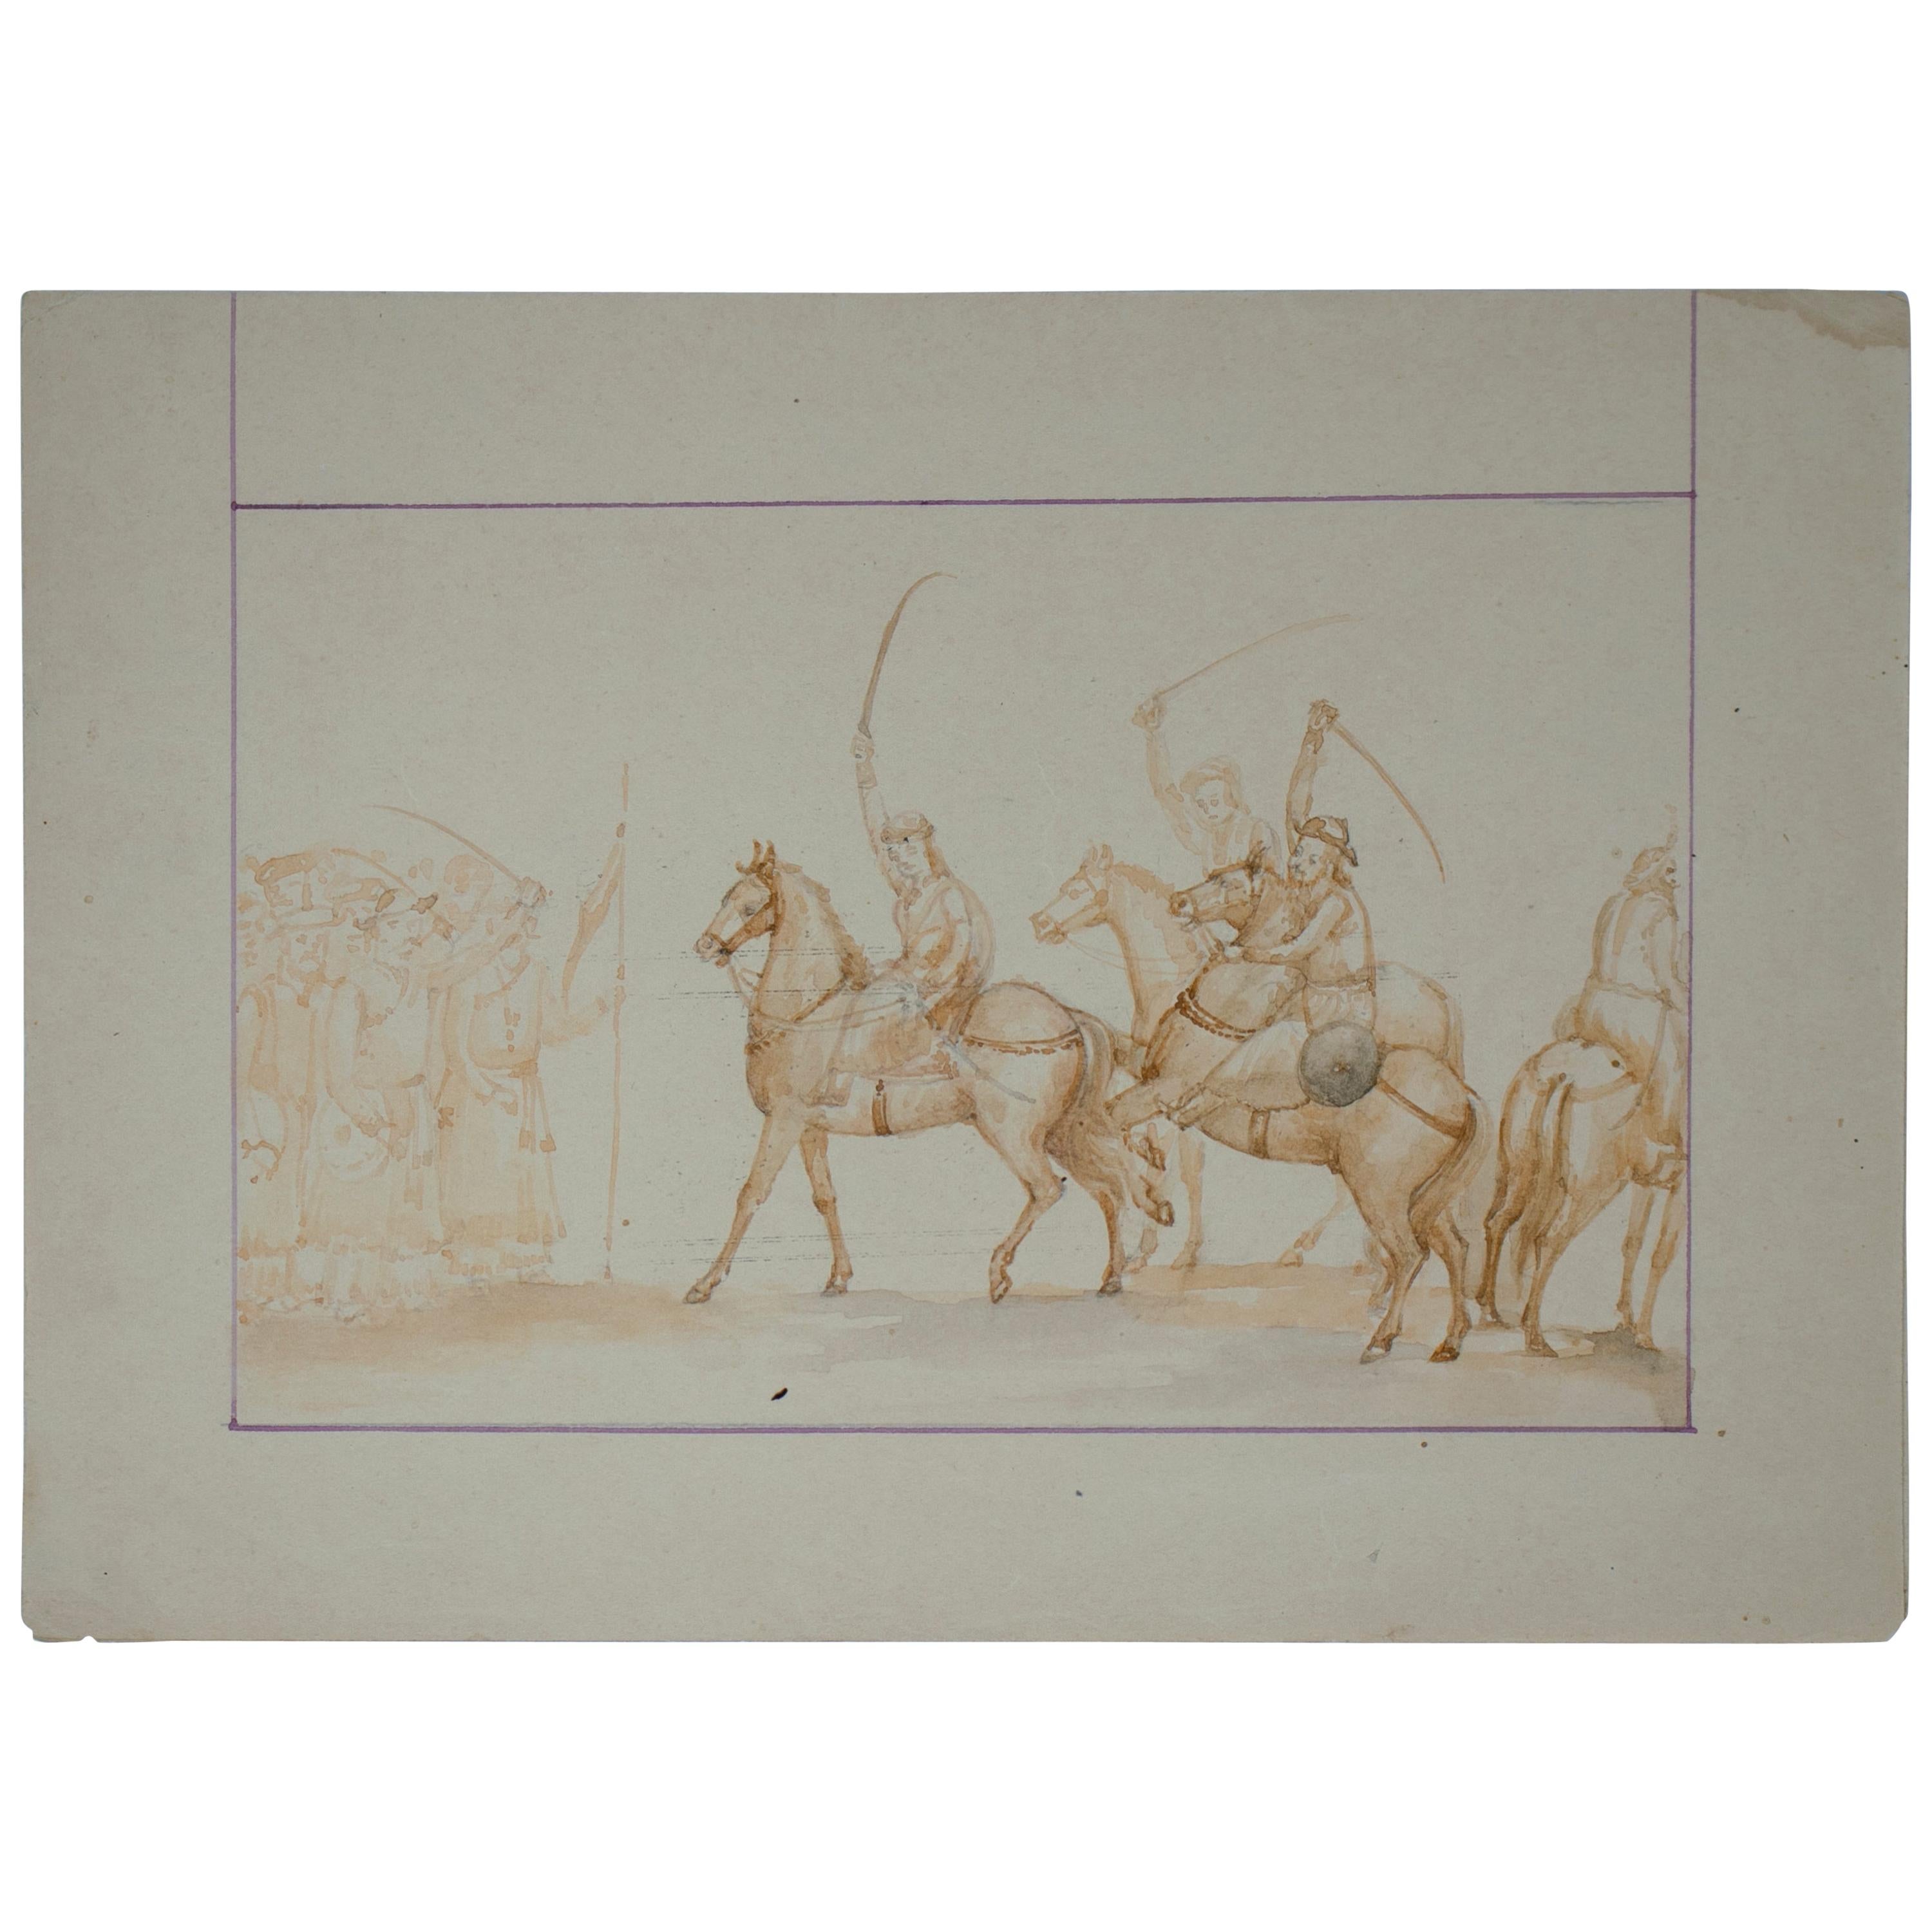 1970s Indian Mughal Gouache Paper Drawing Depicting Military Horsemen